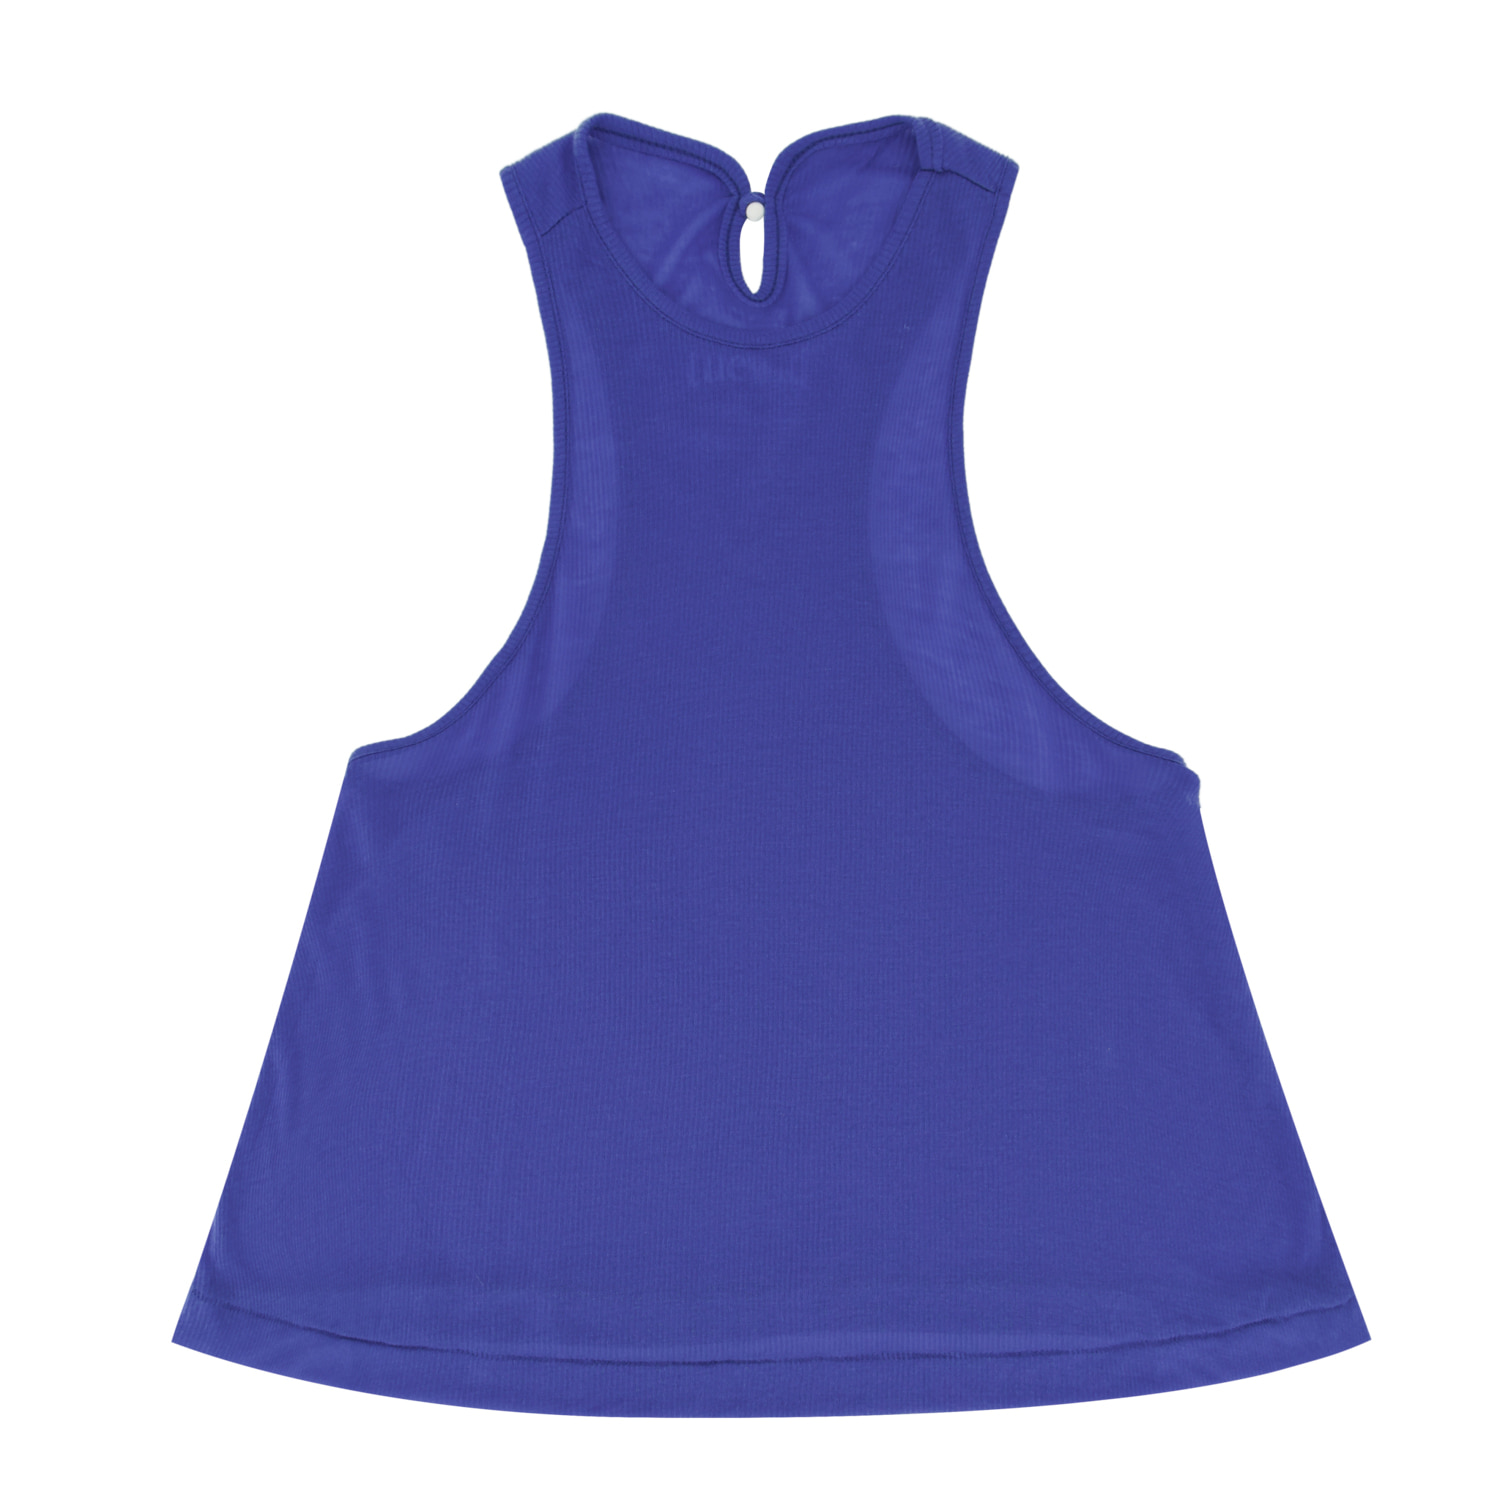 Tuewid classic sleeveless in sleek Cerulean Blue